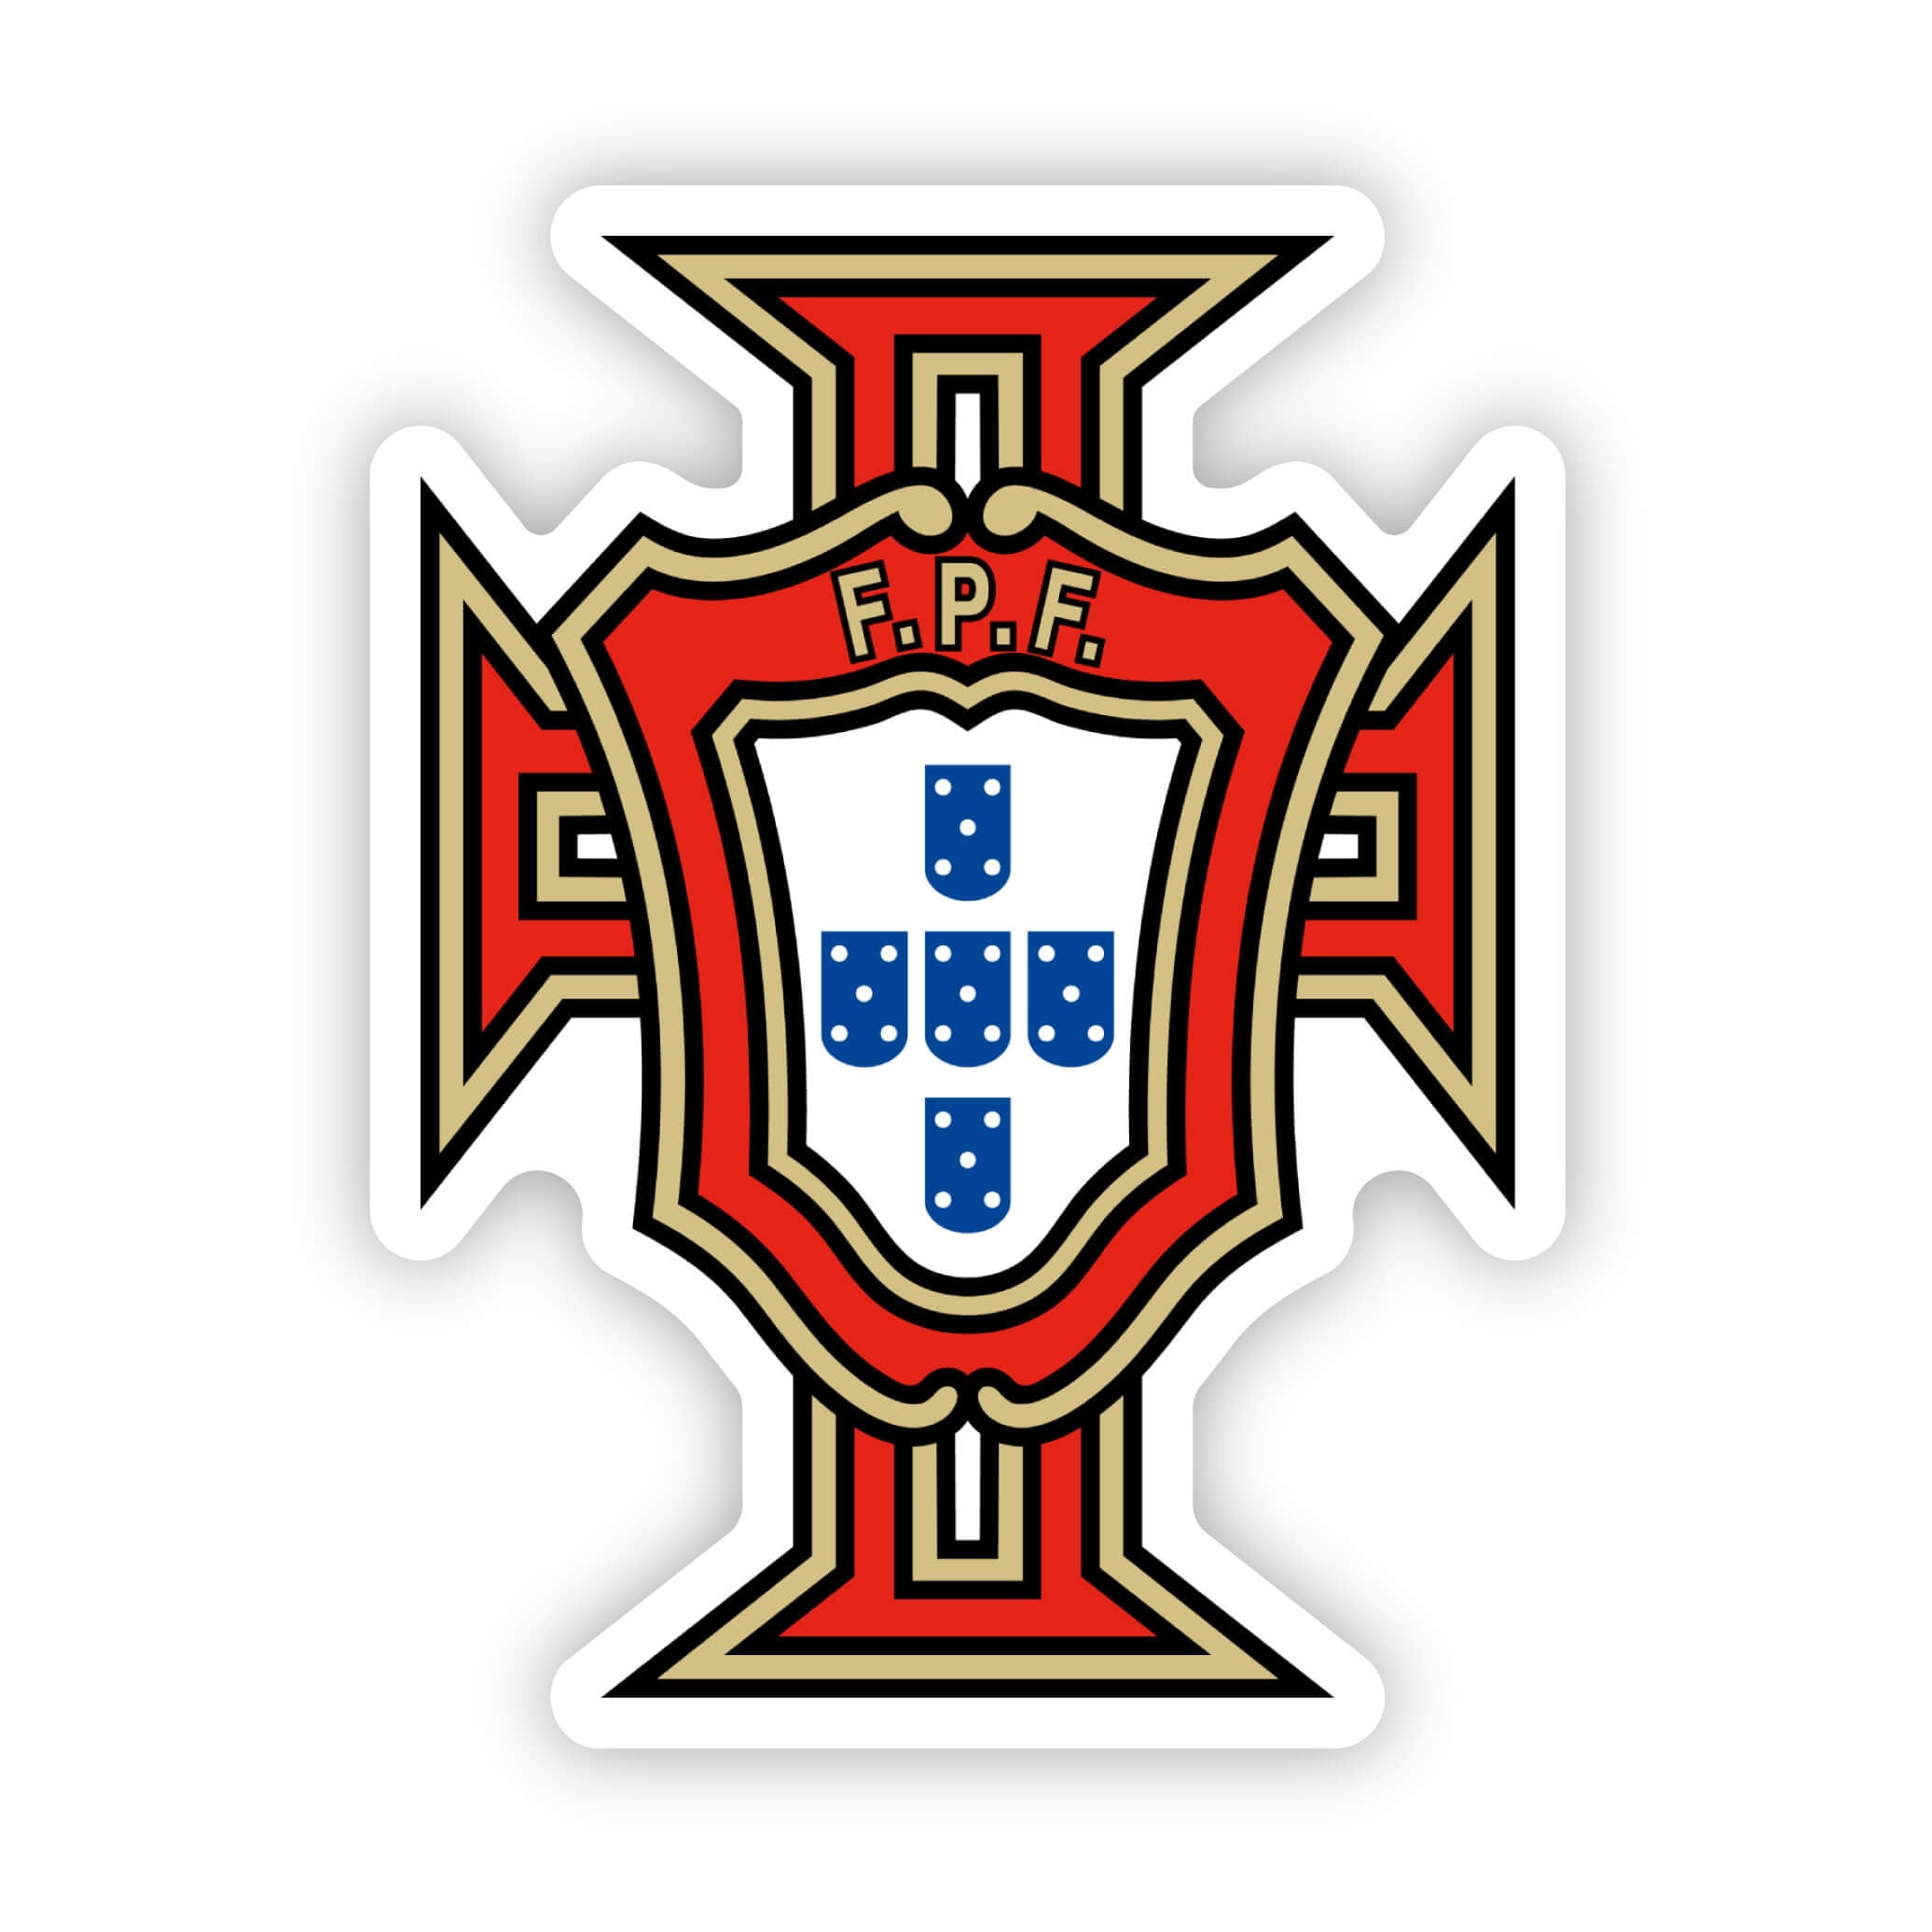 File:Logo Copa Betano do Brasil.png - Wikimedia Commons